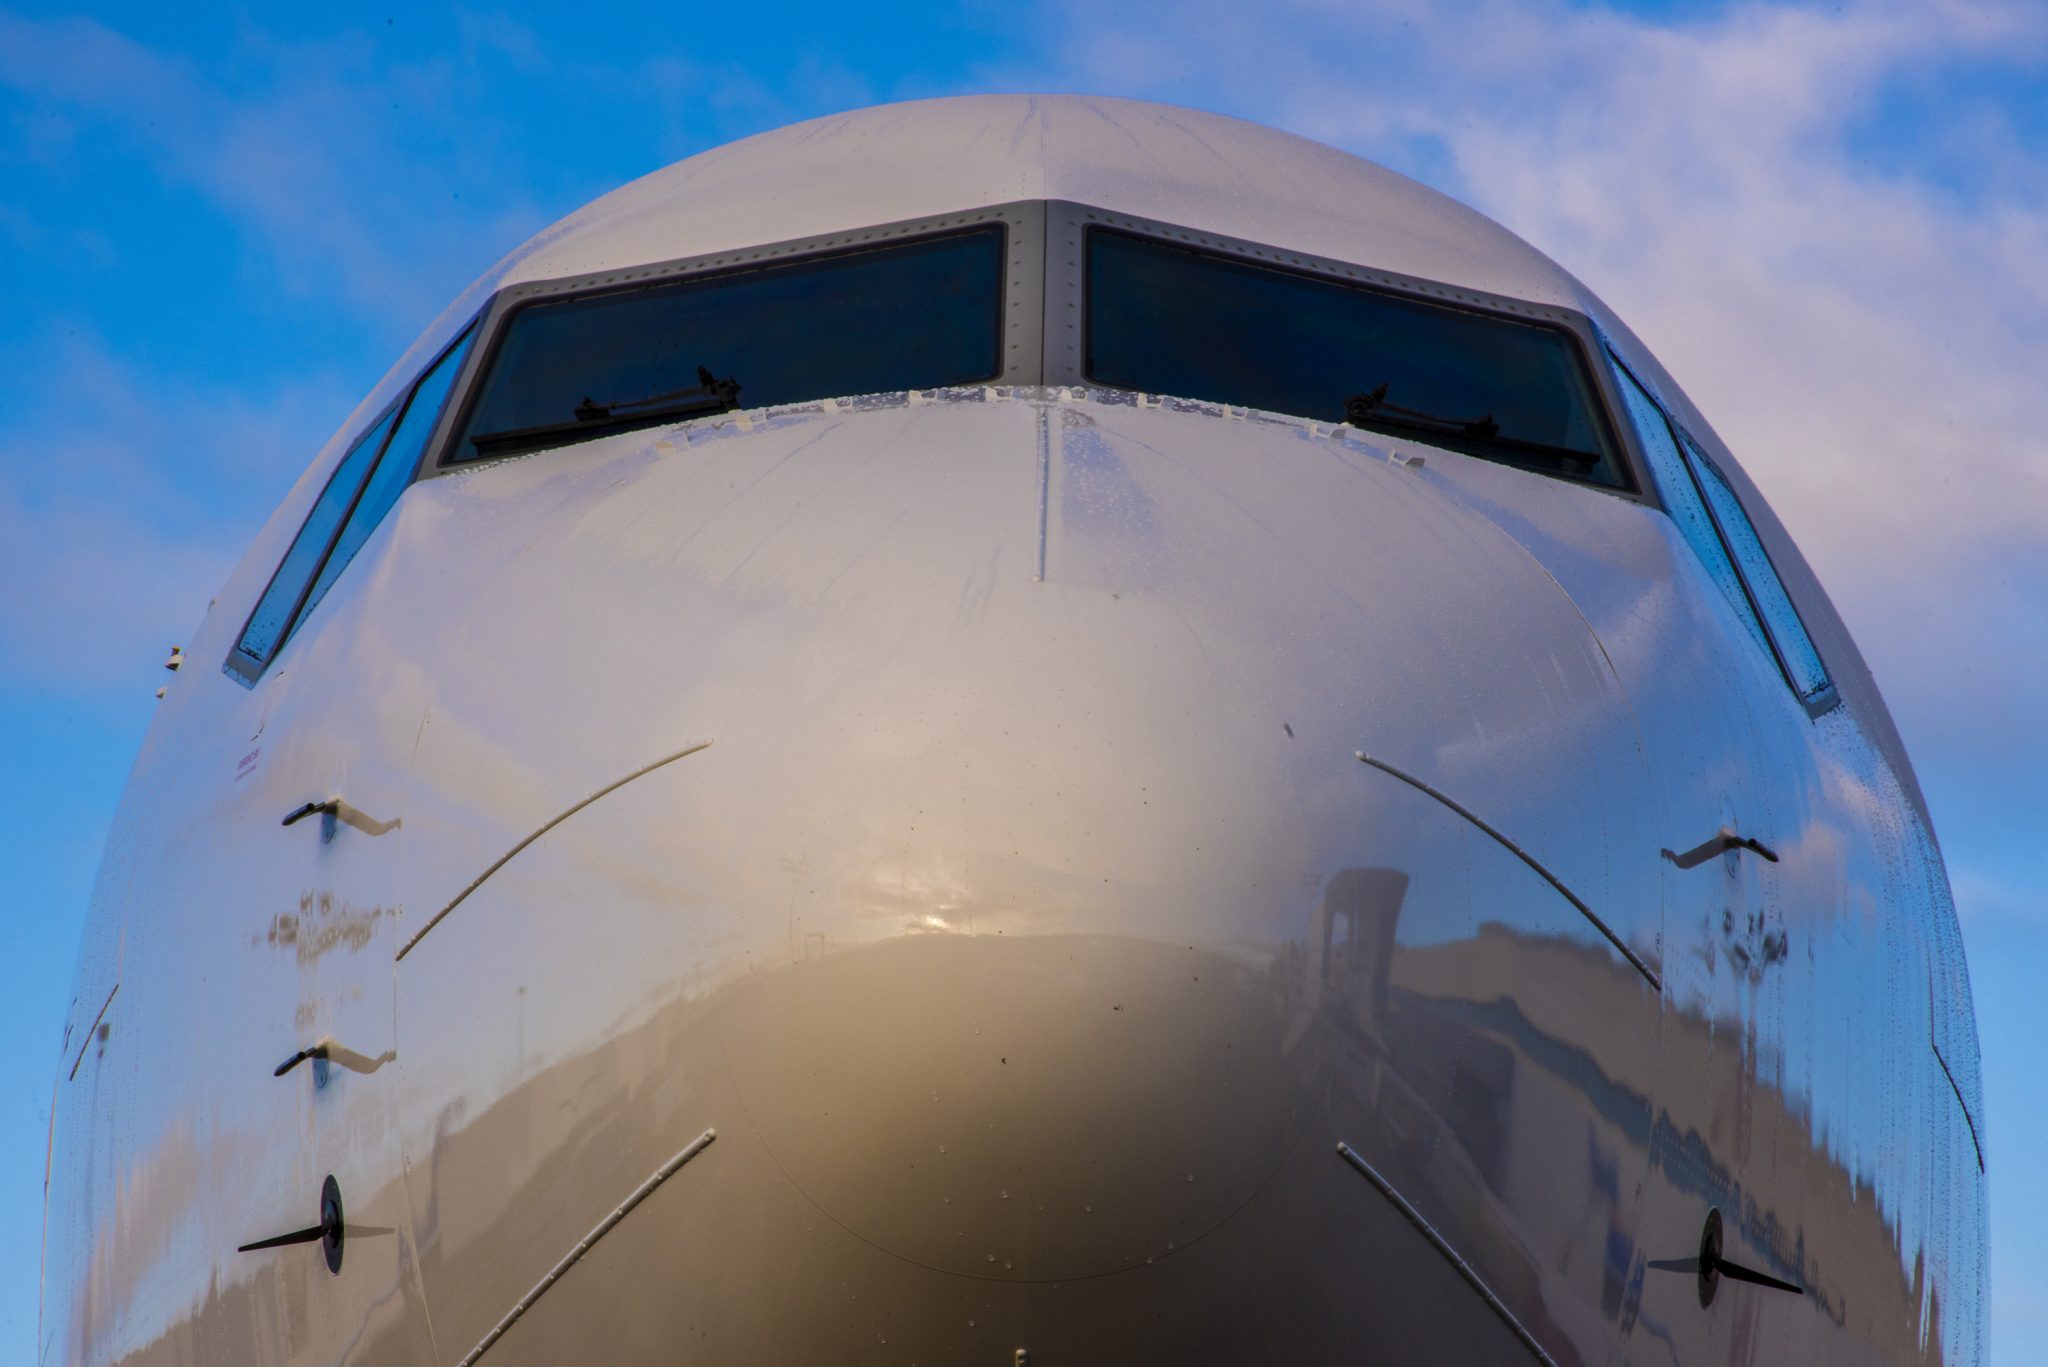 Grupo Aeromexico blames 737 Max grounding for financial decline